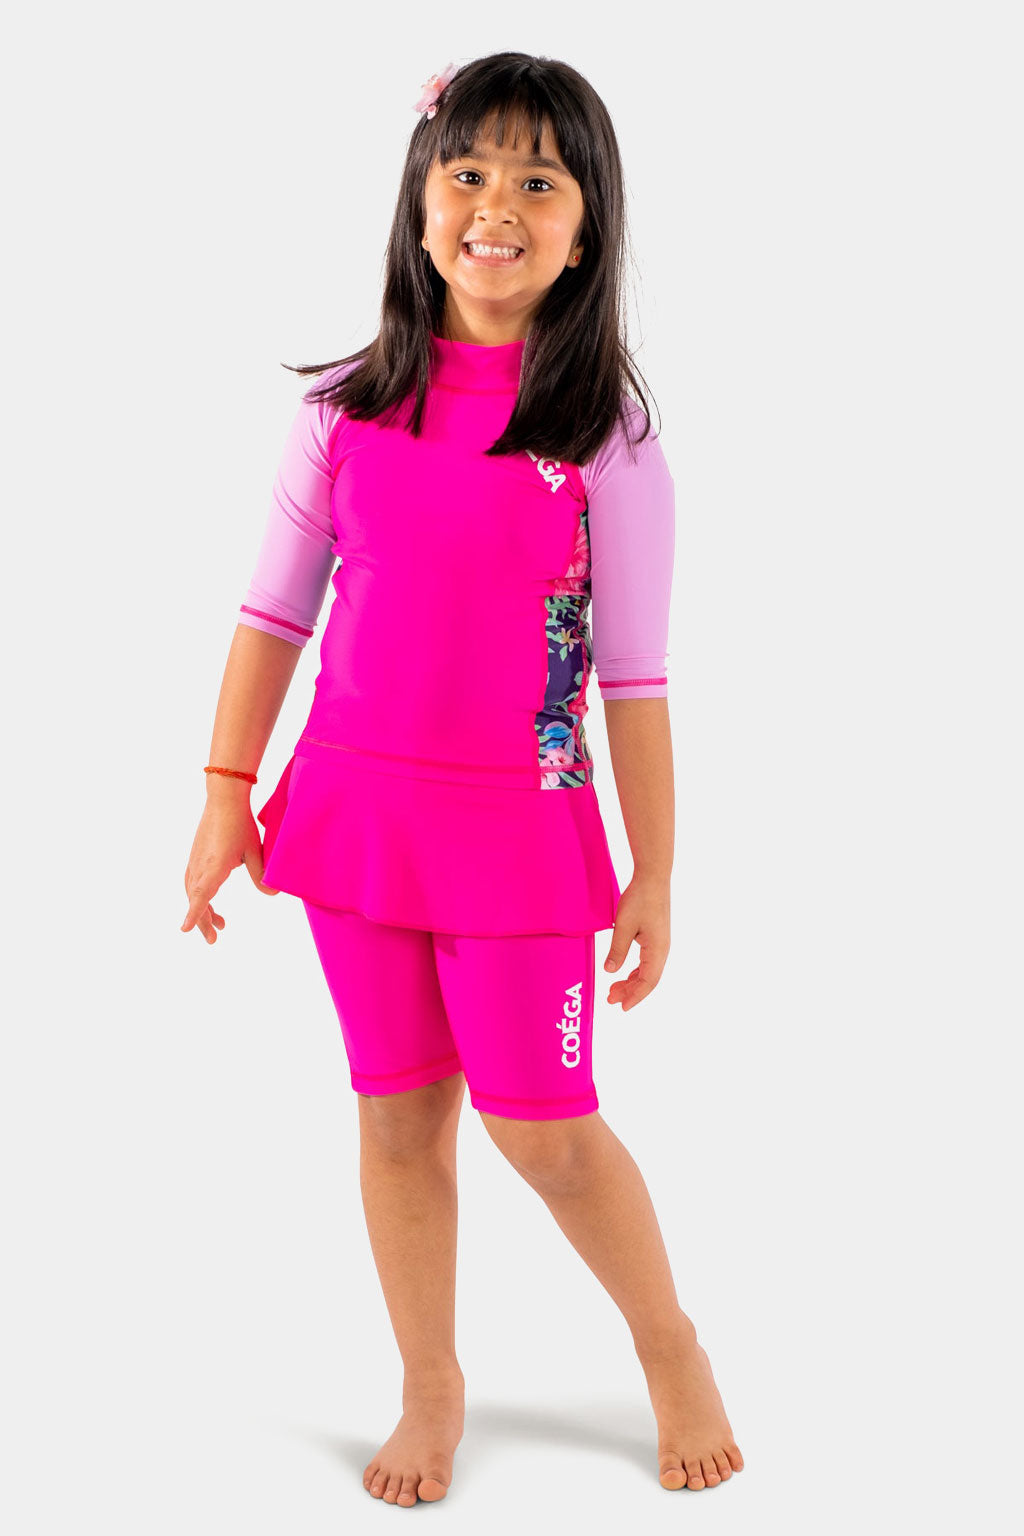 Coega - Girls Kids Skirted Swim Suit Two Piece